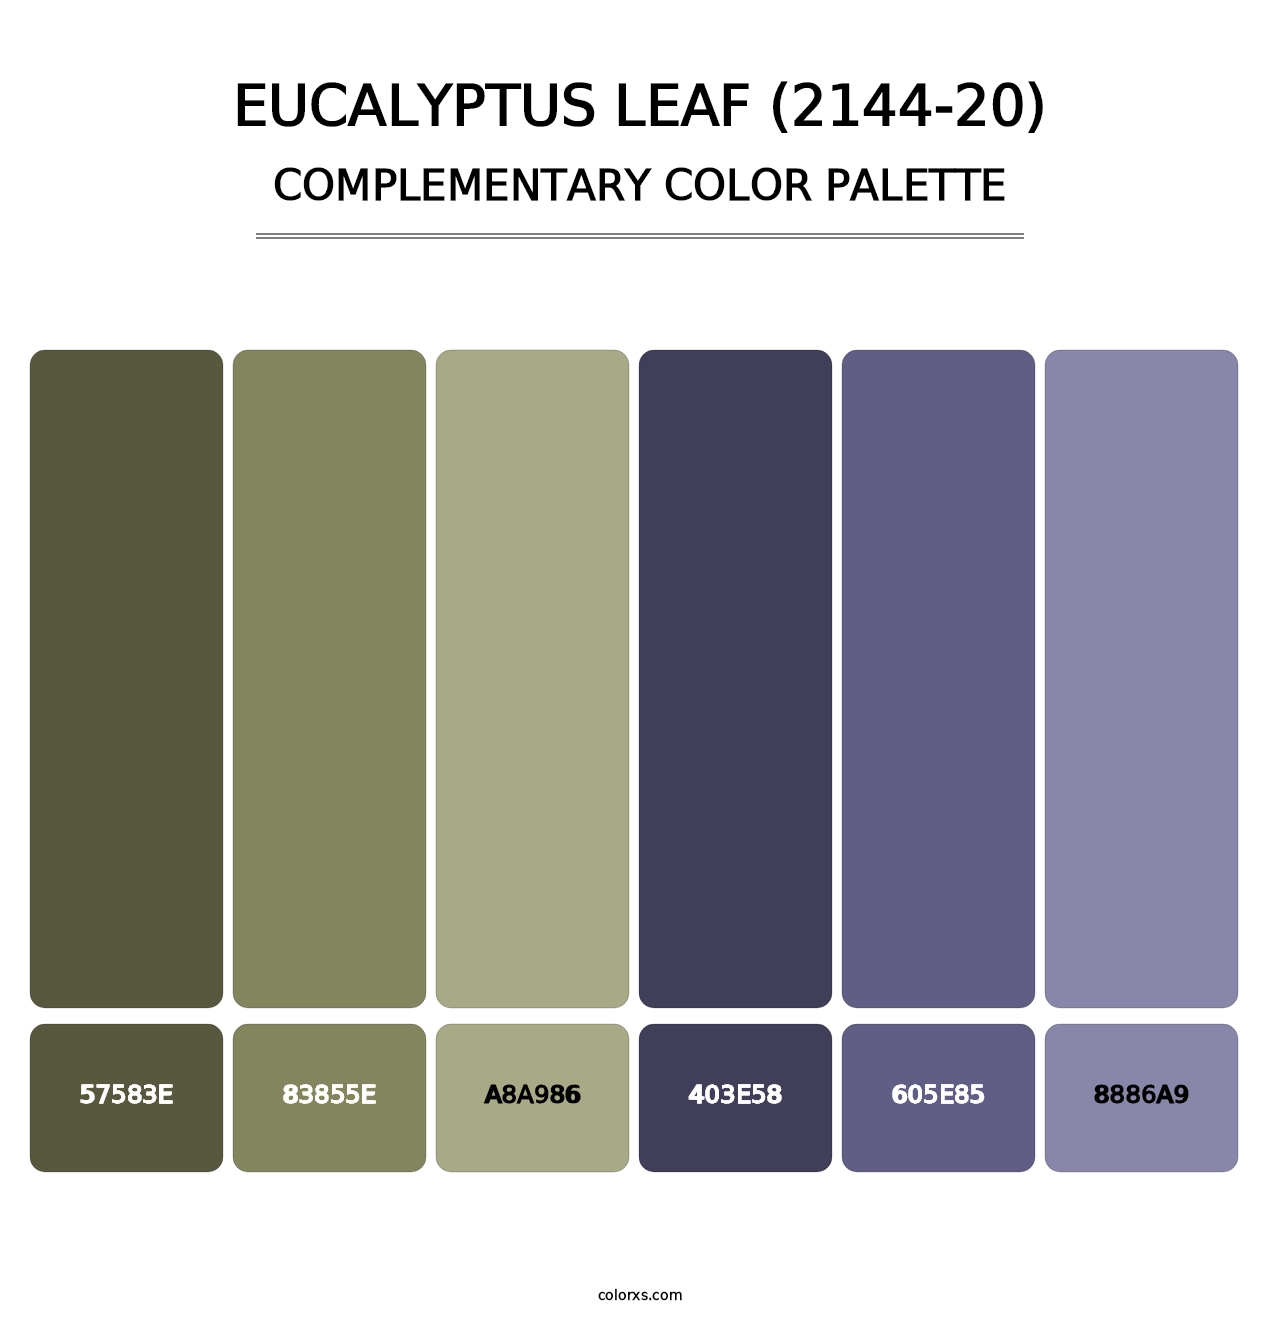 Eucalyptus Leaf (2144-20) - Complementary Color Palette